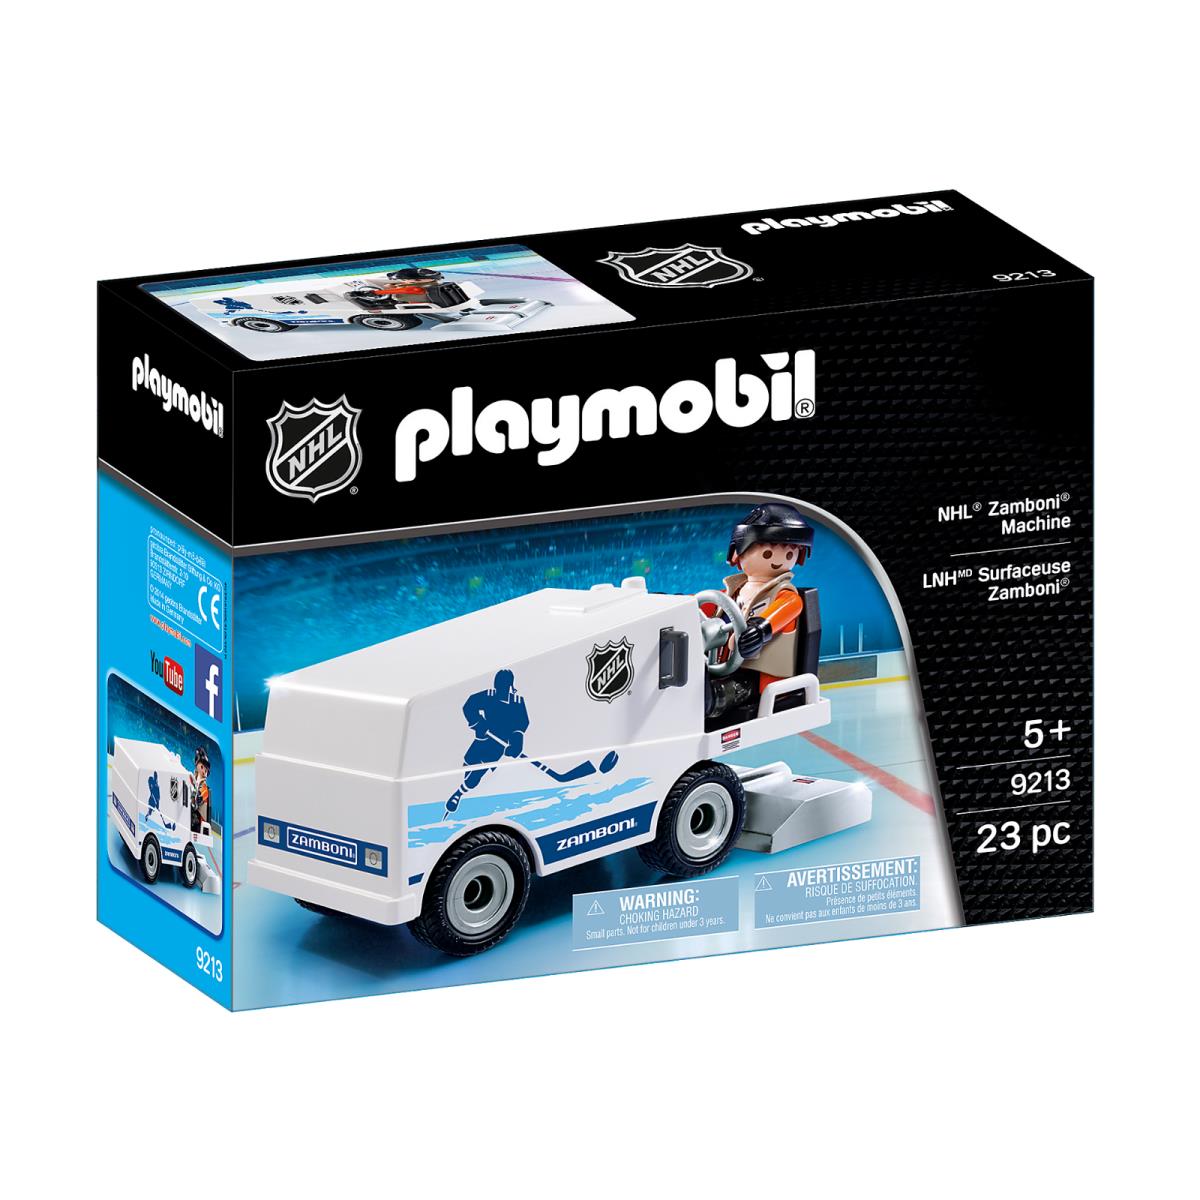 Playmobil Nhl Zamboni Machine 9213 23 PC Toy Building Set Hockey Vehicle